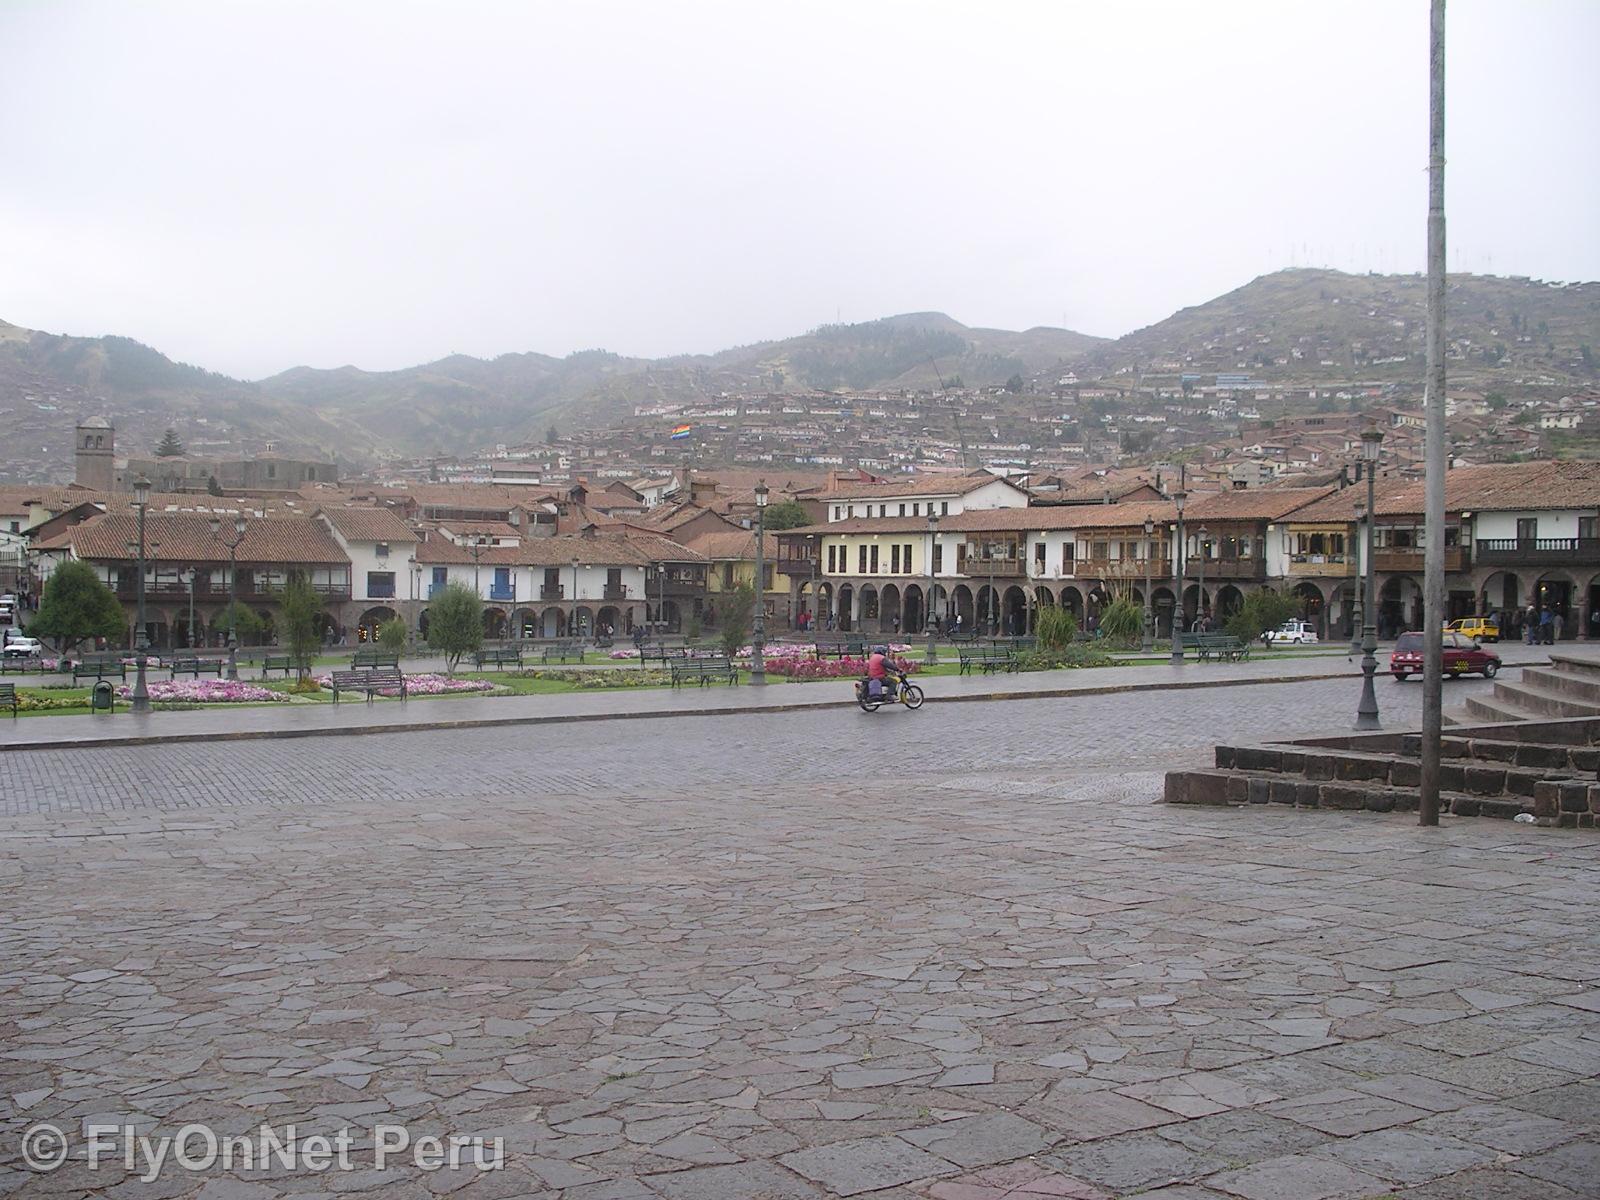 Álbum de fotos: Main Place of Cusco